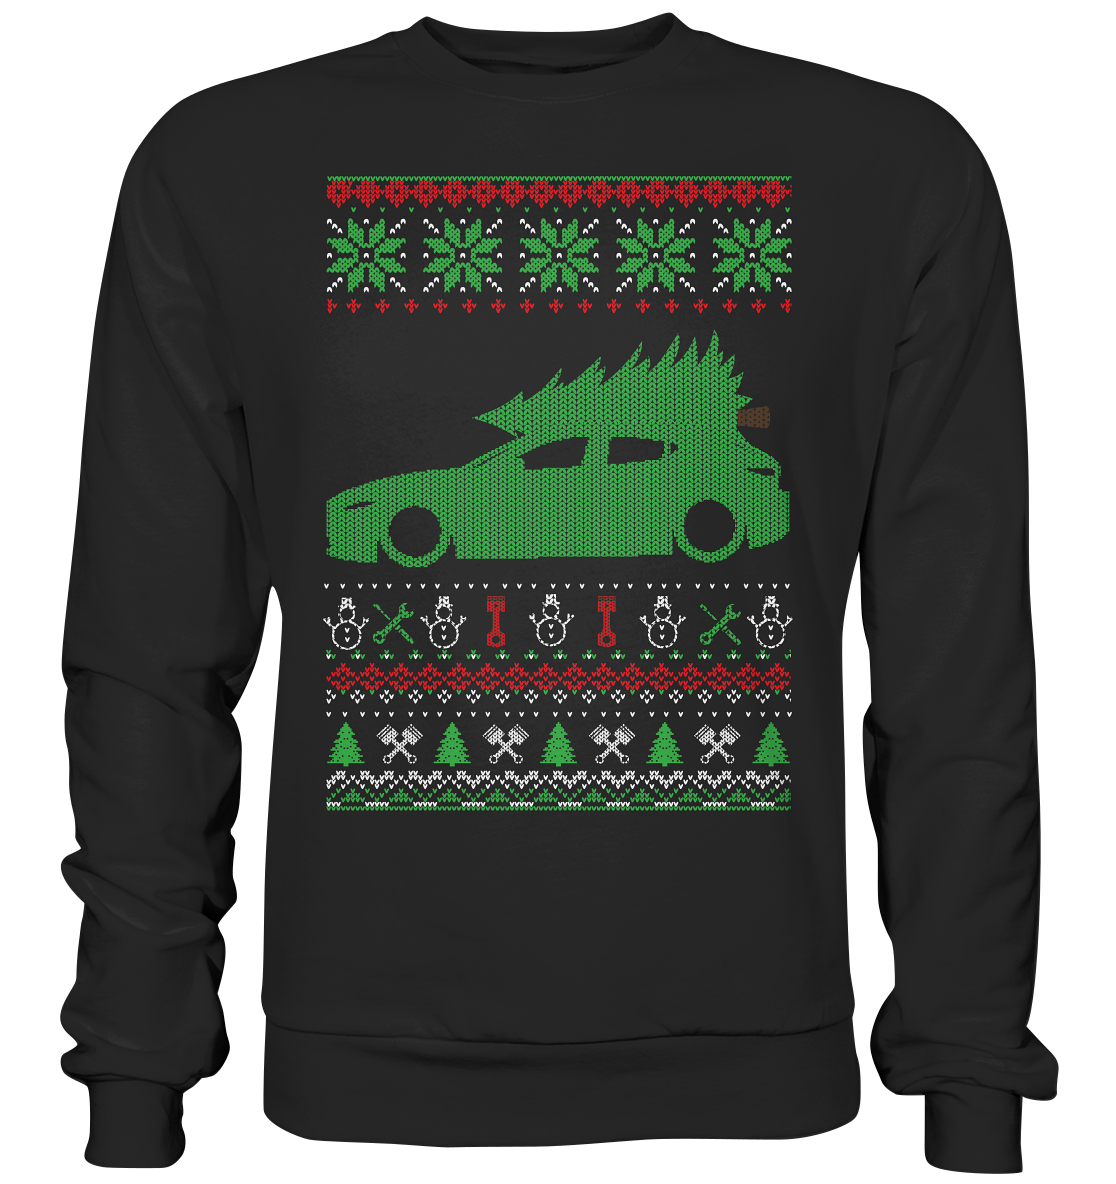 CODUGLY_MGK3BP - Premium Sweatshirt